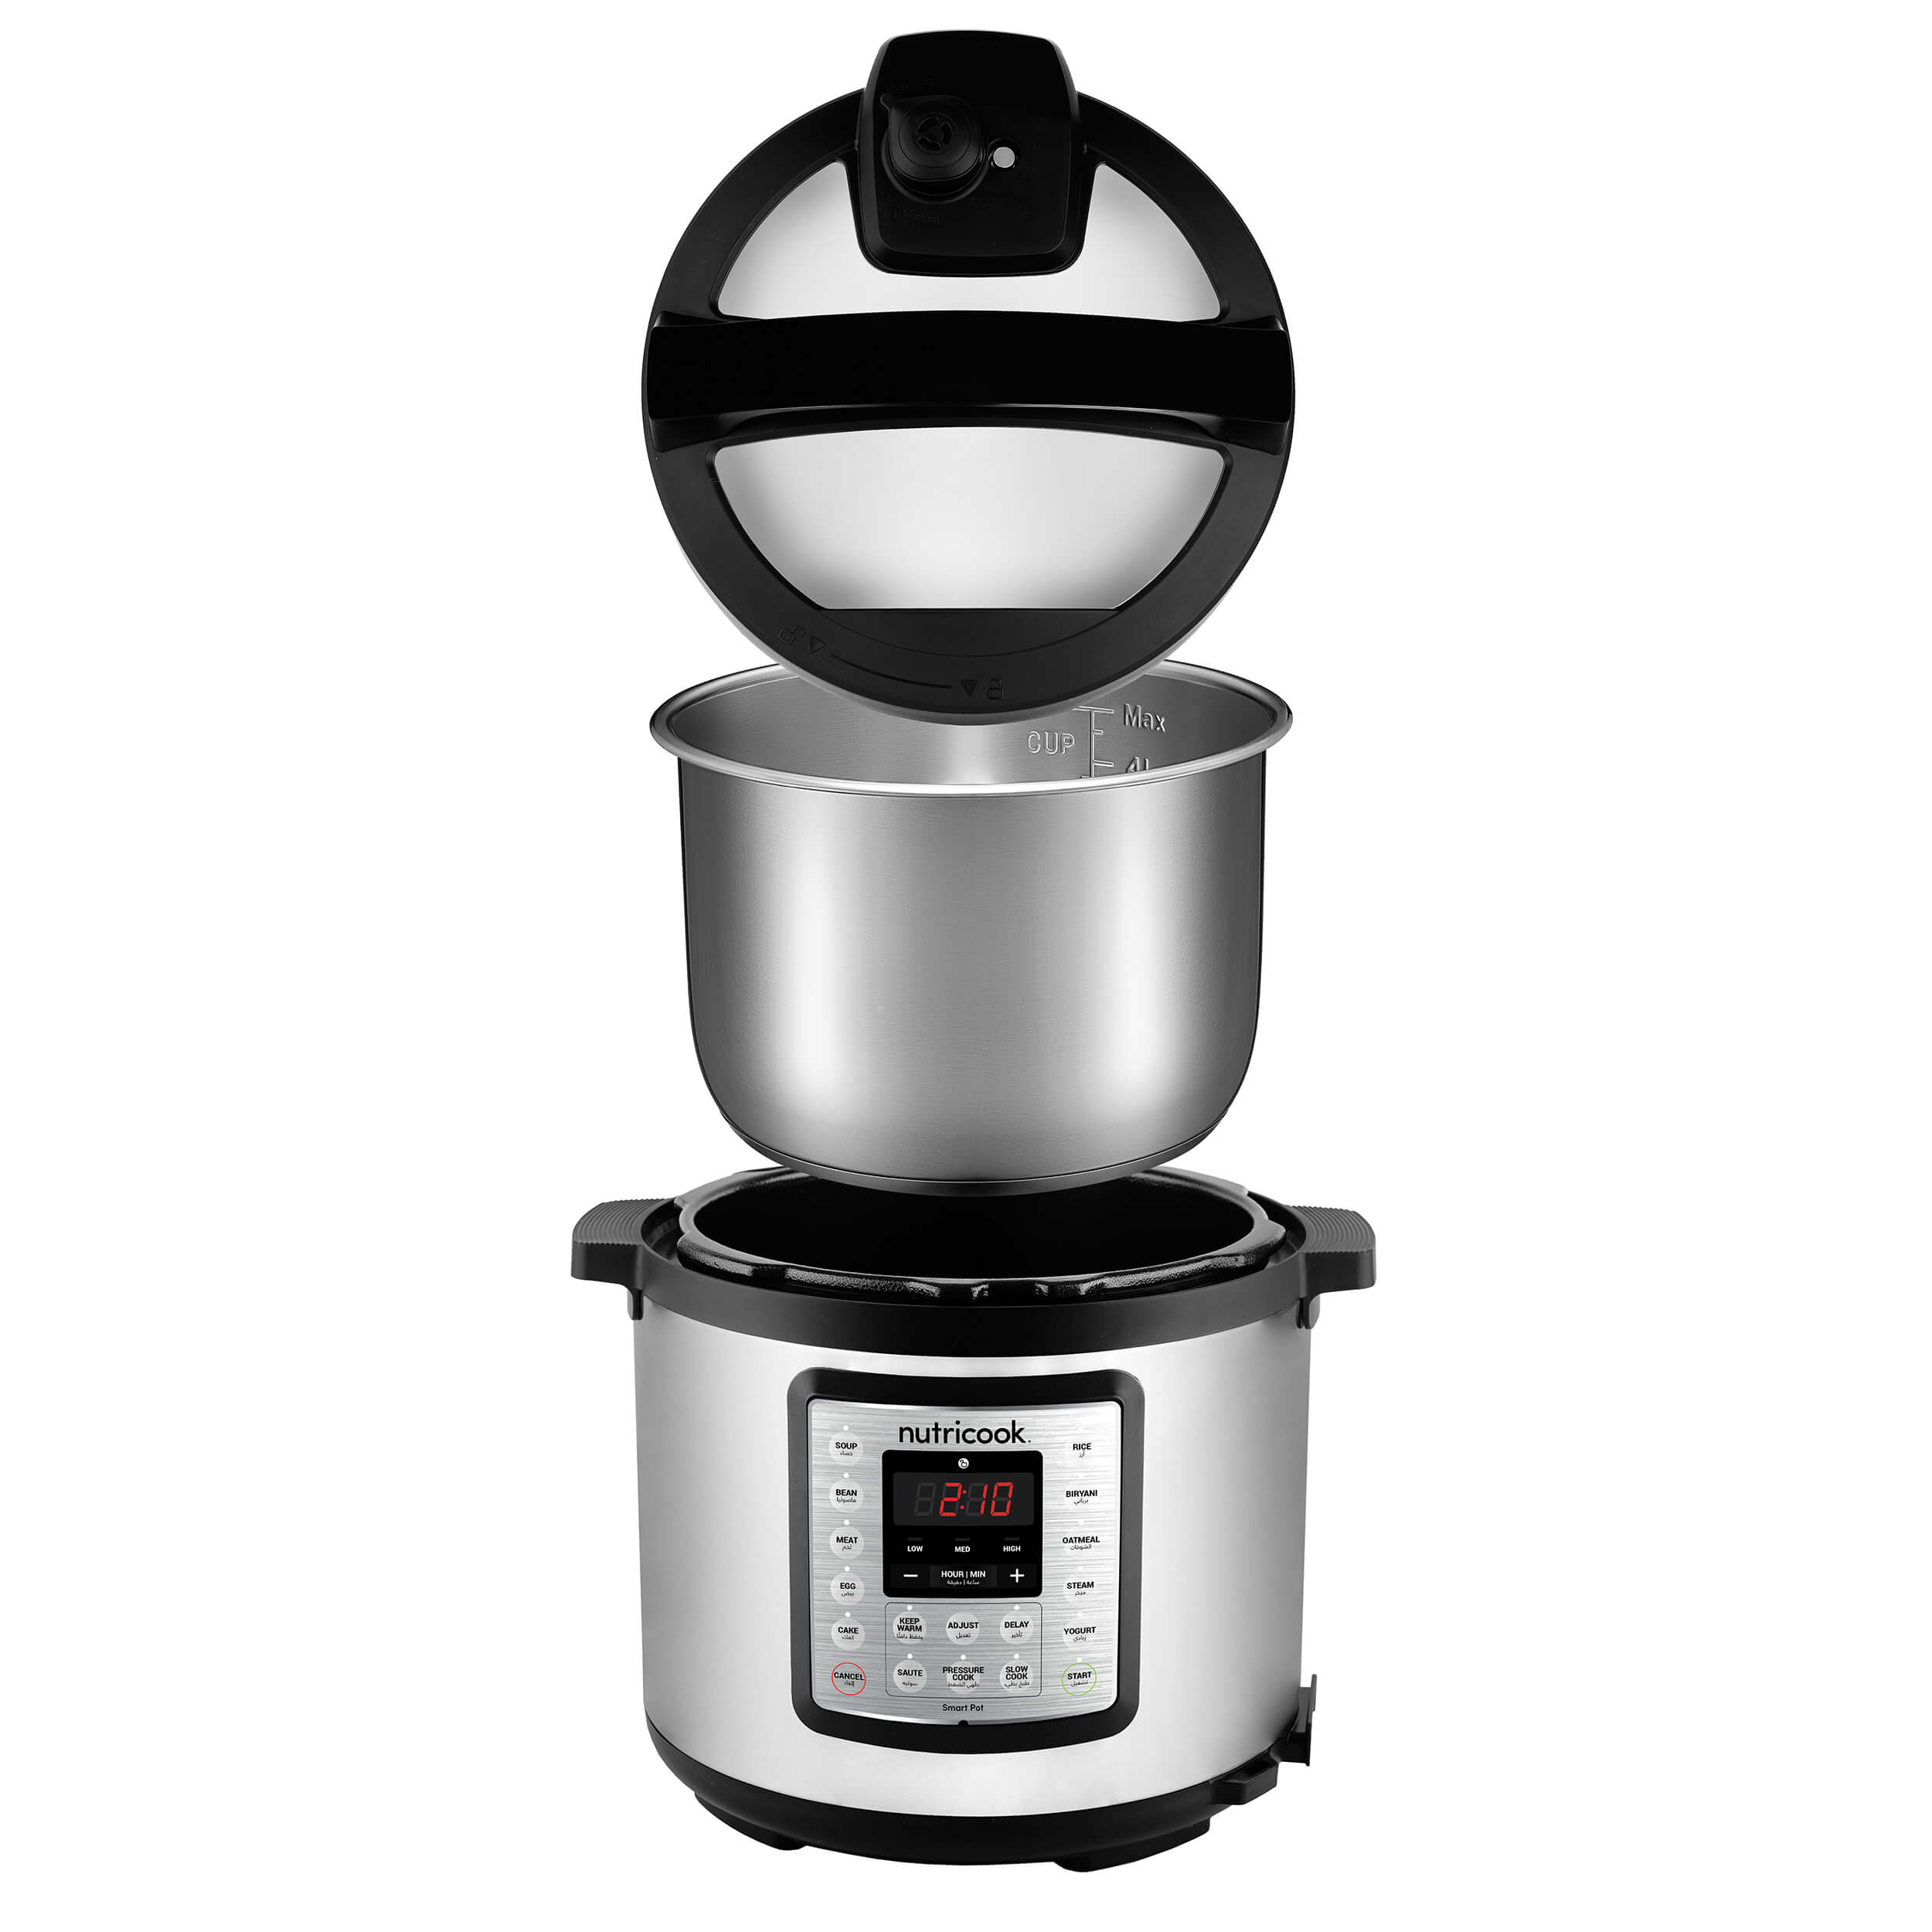 Nutricook Smart Pot Pro+ by Nutribullet 1000 Watts - 10 in 1 Instant  Programmable Electric Pressure Cooker, 6 Liters - Black